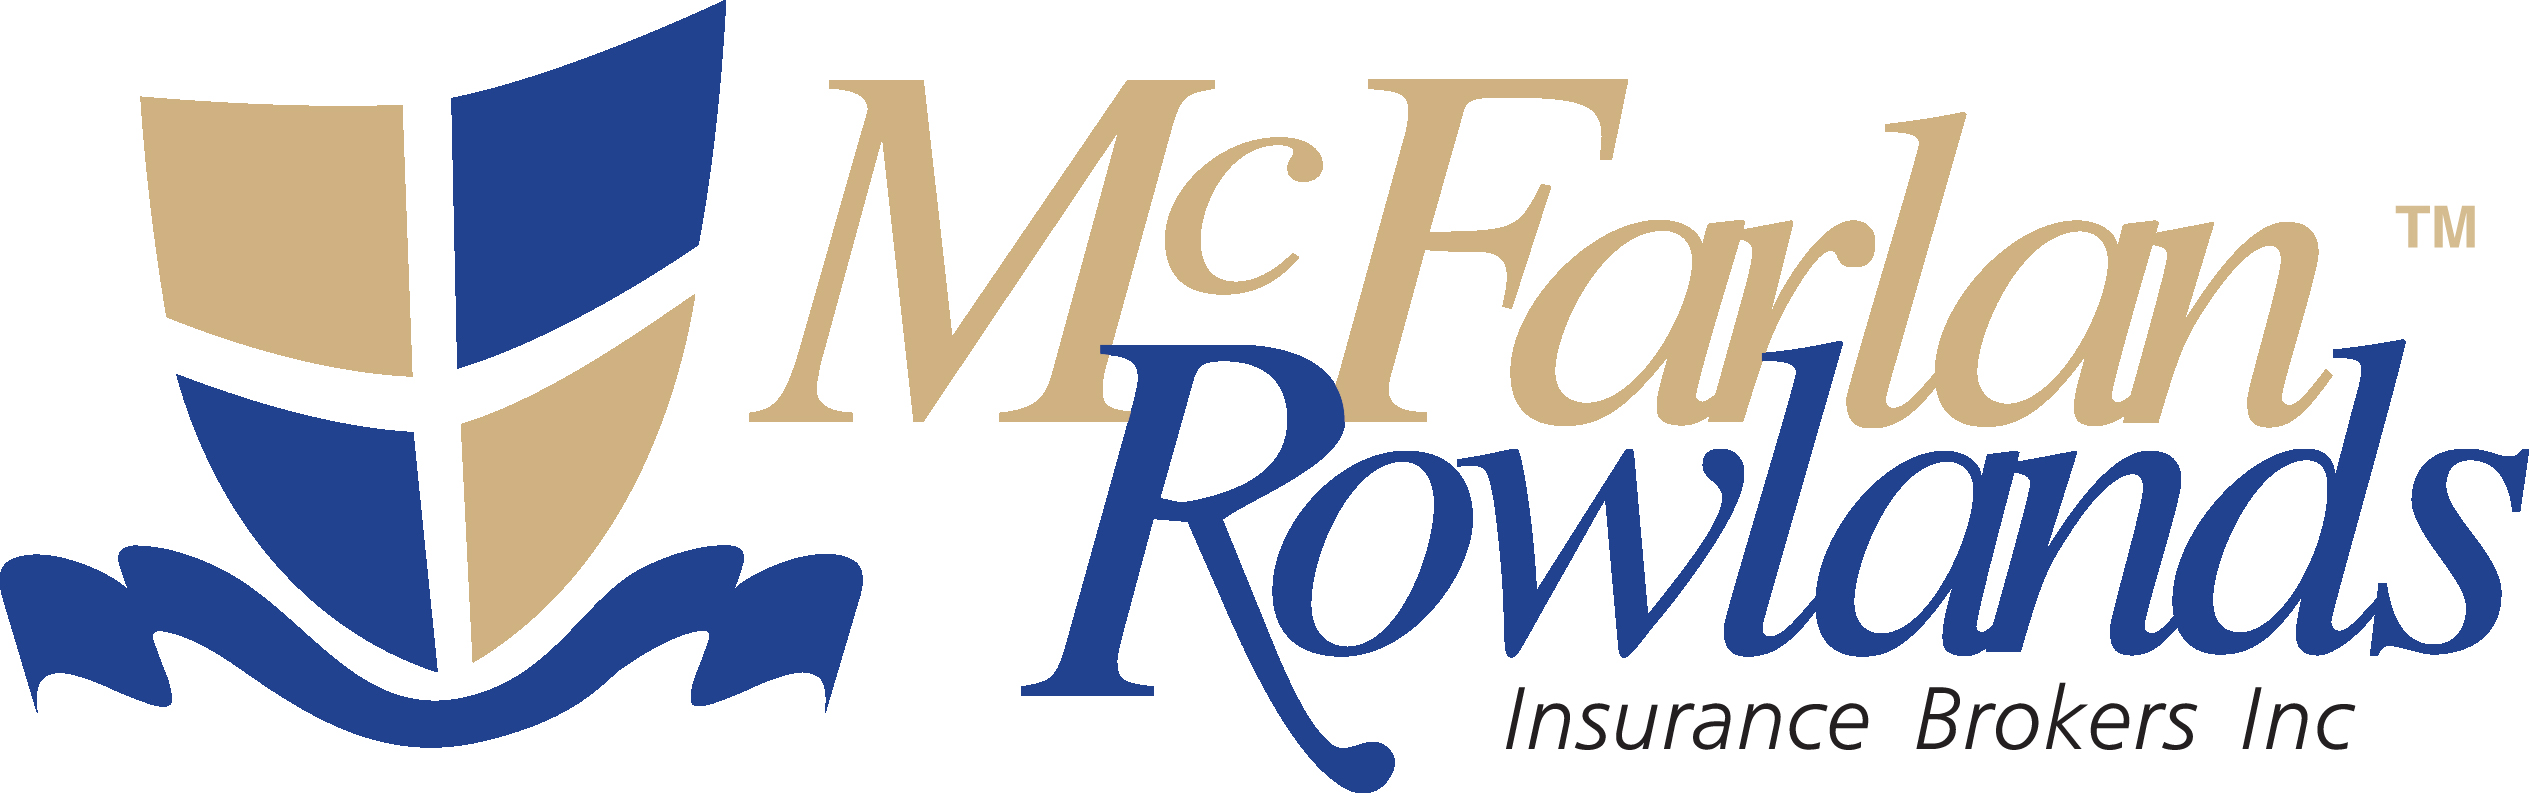 mcfarland logo